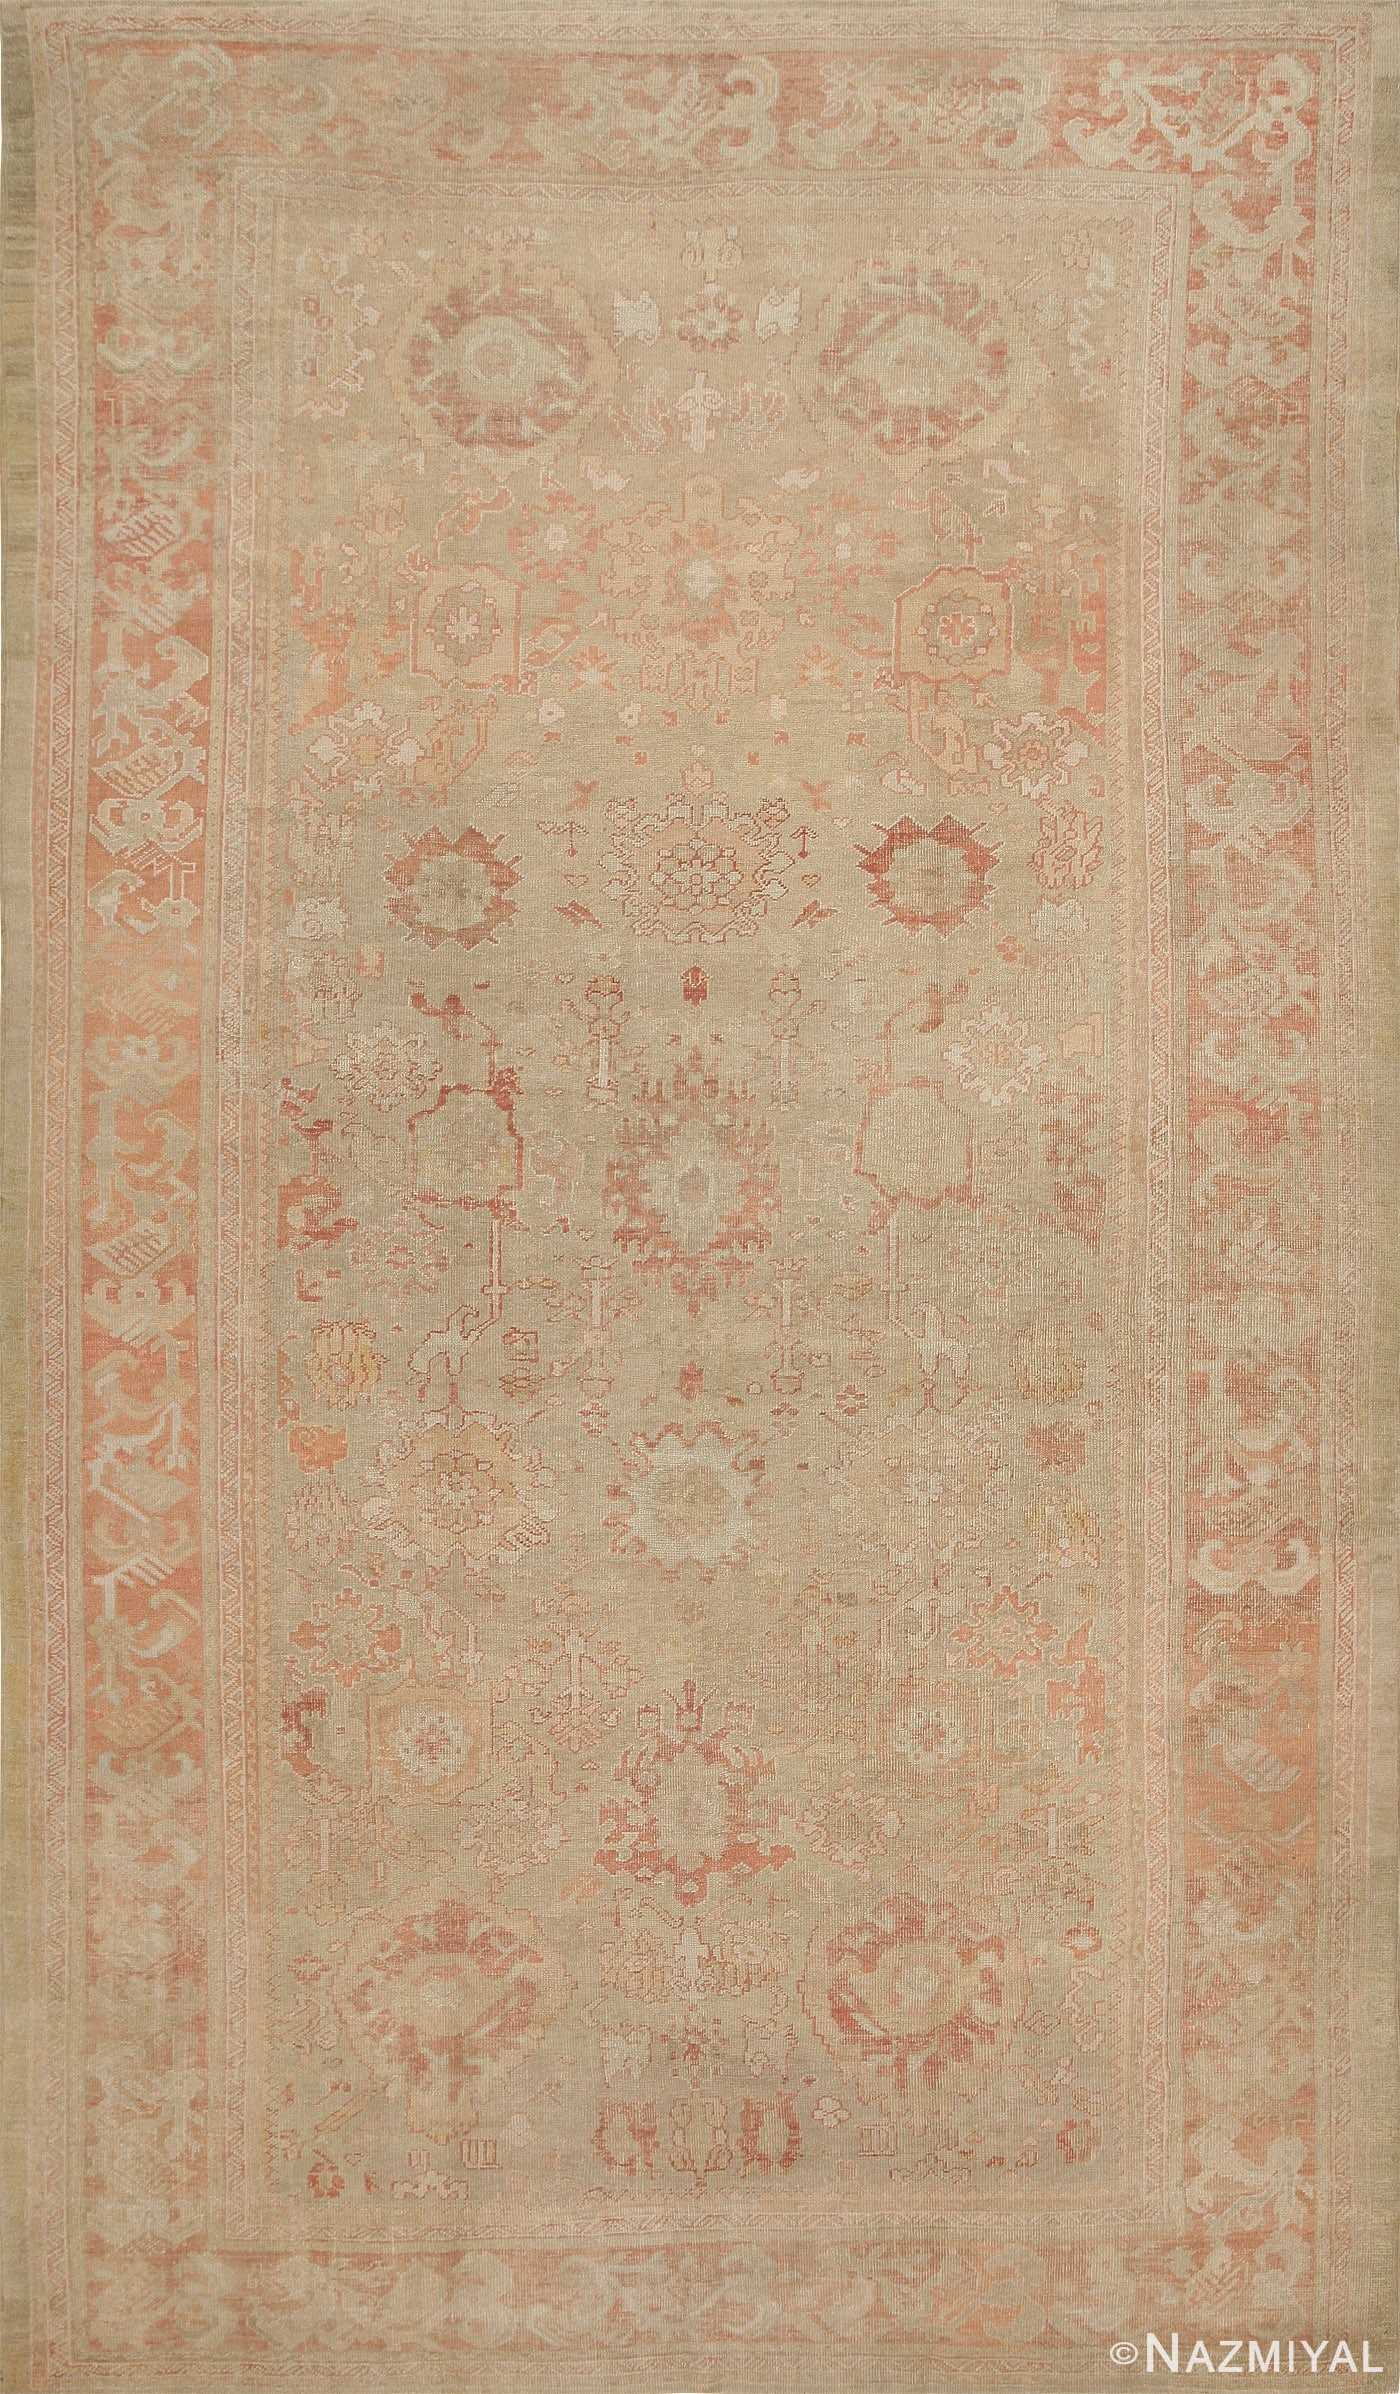 Antique Turkish Oushak Carpet 71268 by Nazmiyal Antique Rugs